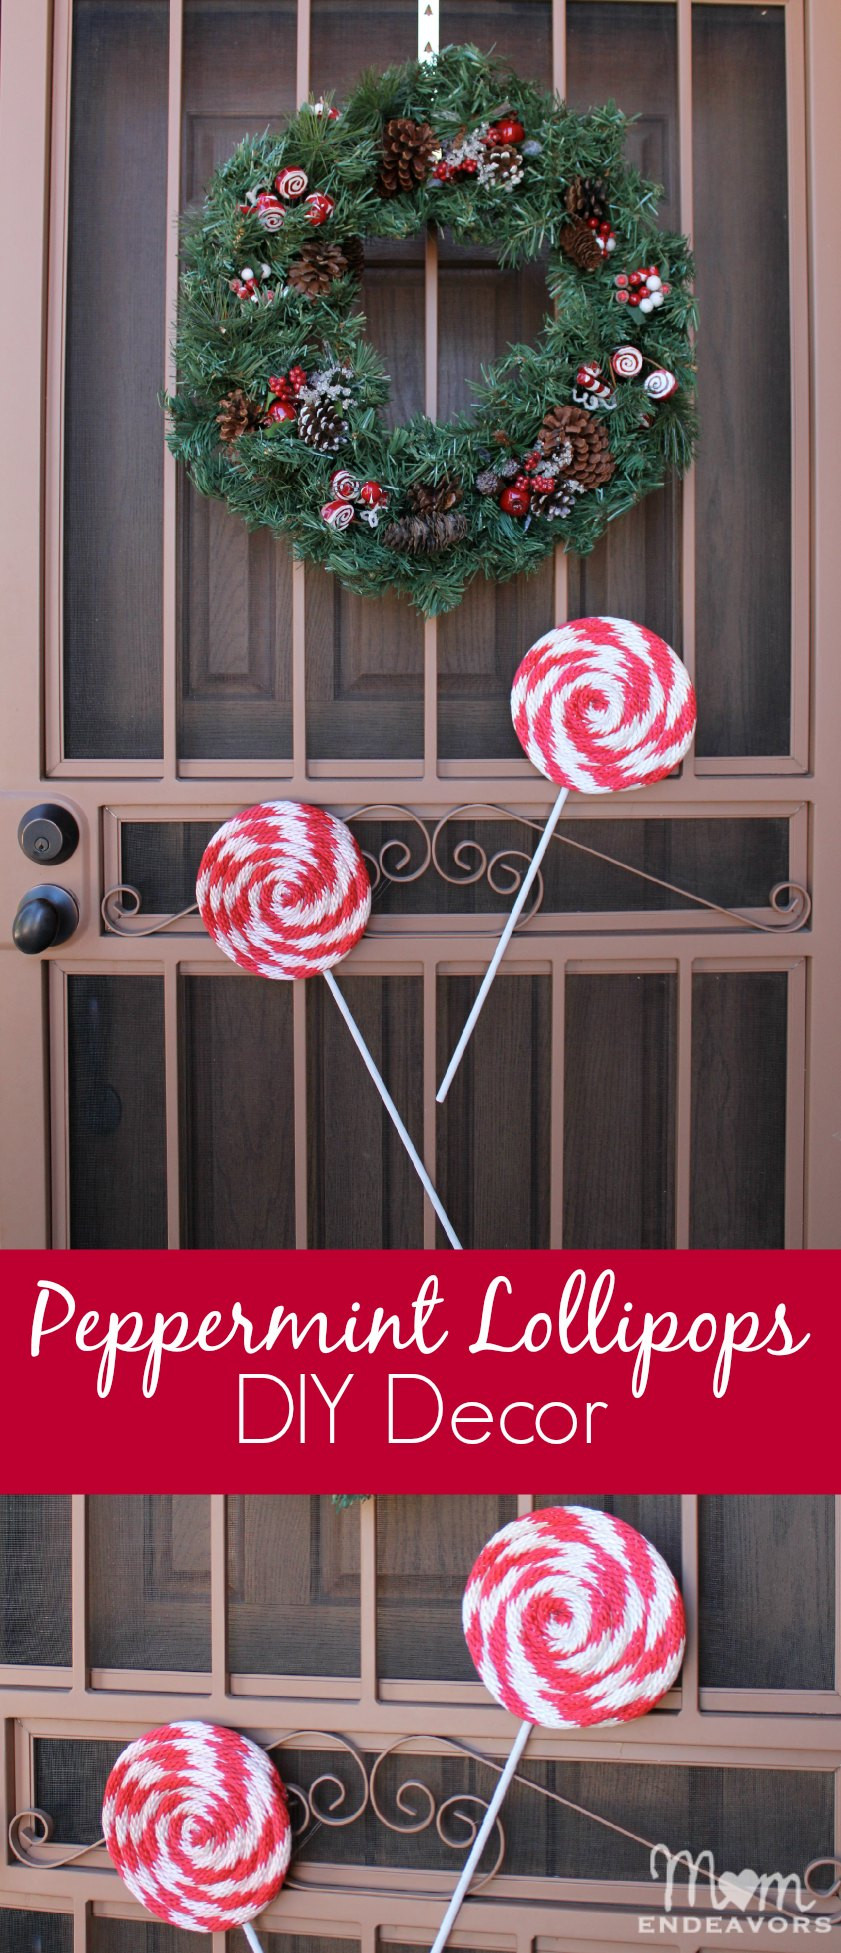 Best ideas about DIY Xmas Decoration
. Save or Pin DIY Peppermint Lollipops Christmas Decor Now.